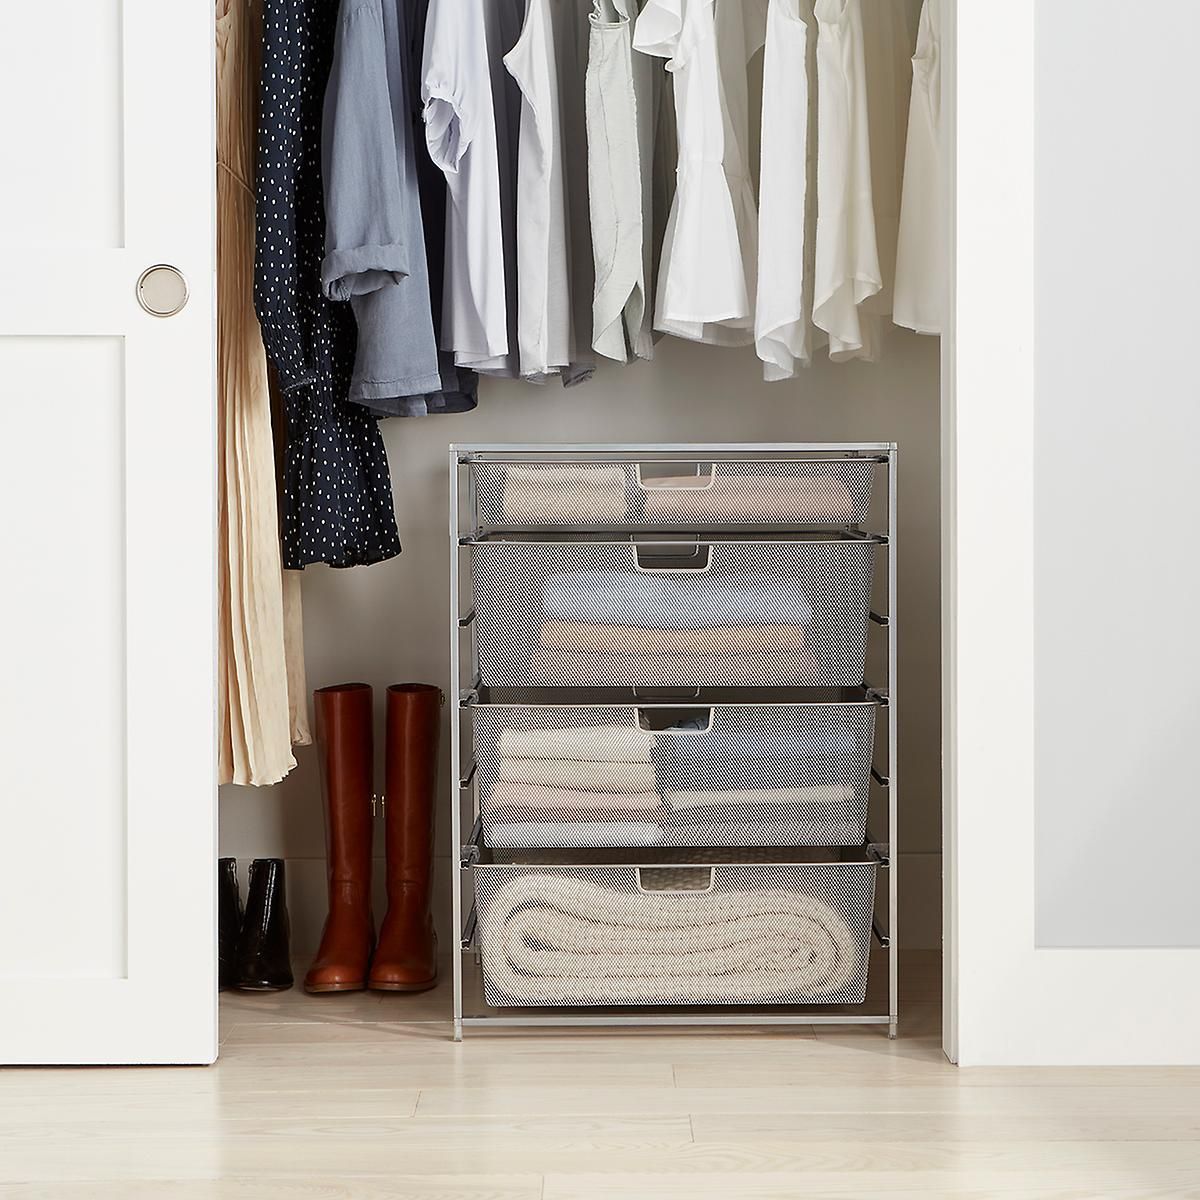 35 Best Closet Organization Ideas To Maximize Space With Regard To Closet Organizer Wardrobes (View 10 of 15)